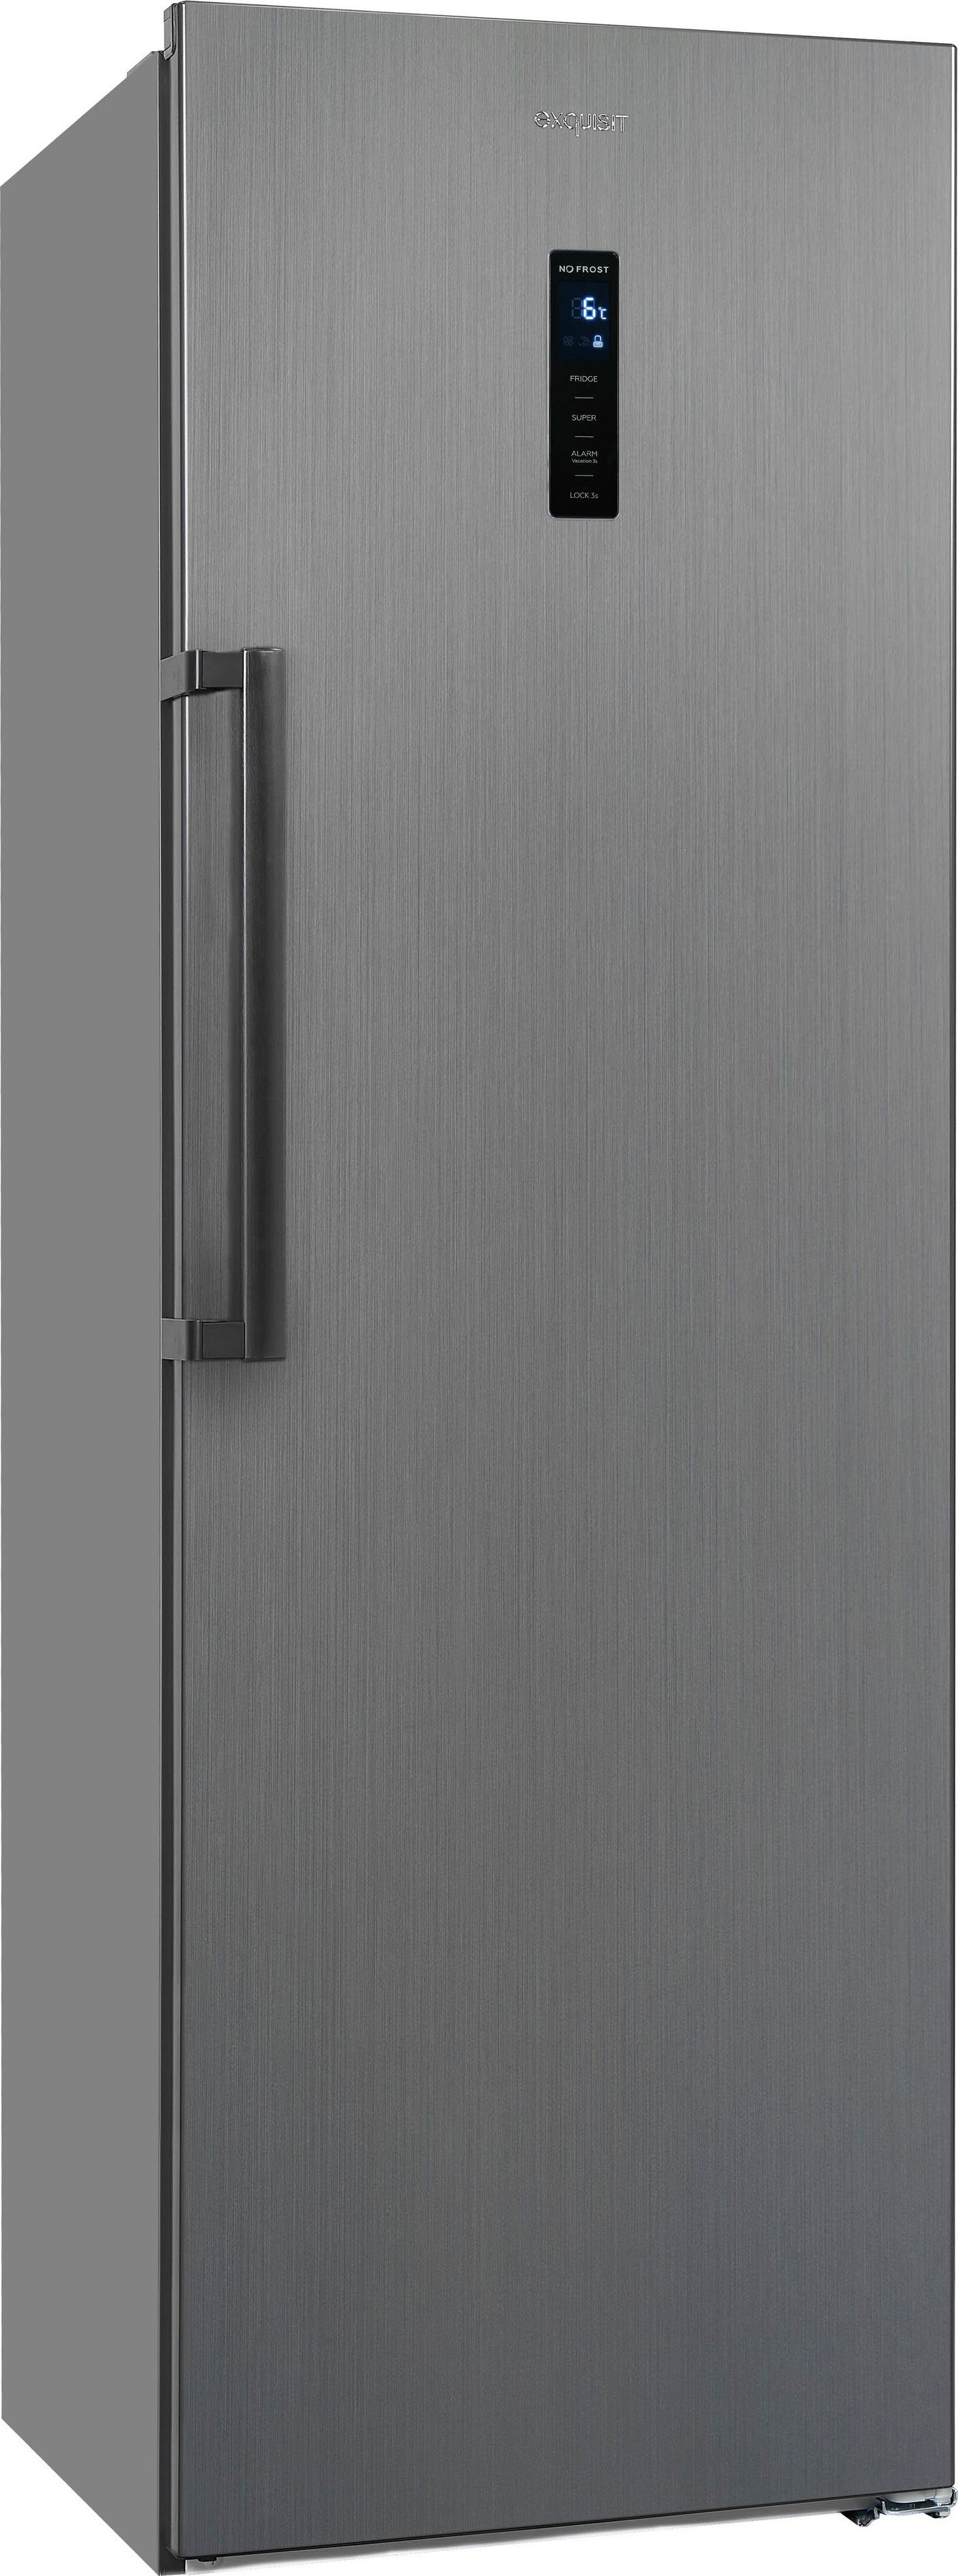 exquisit Vollraumkühlschrank KS360-V-HE-040D, 185 cm breit hoch, cm grau 60